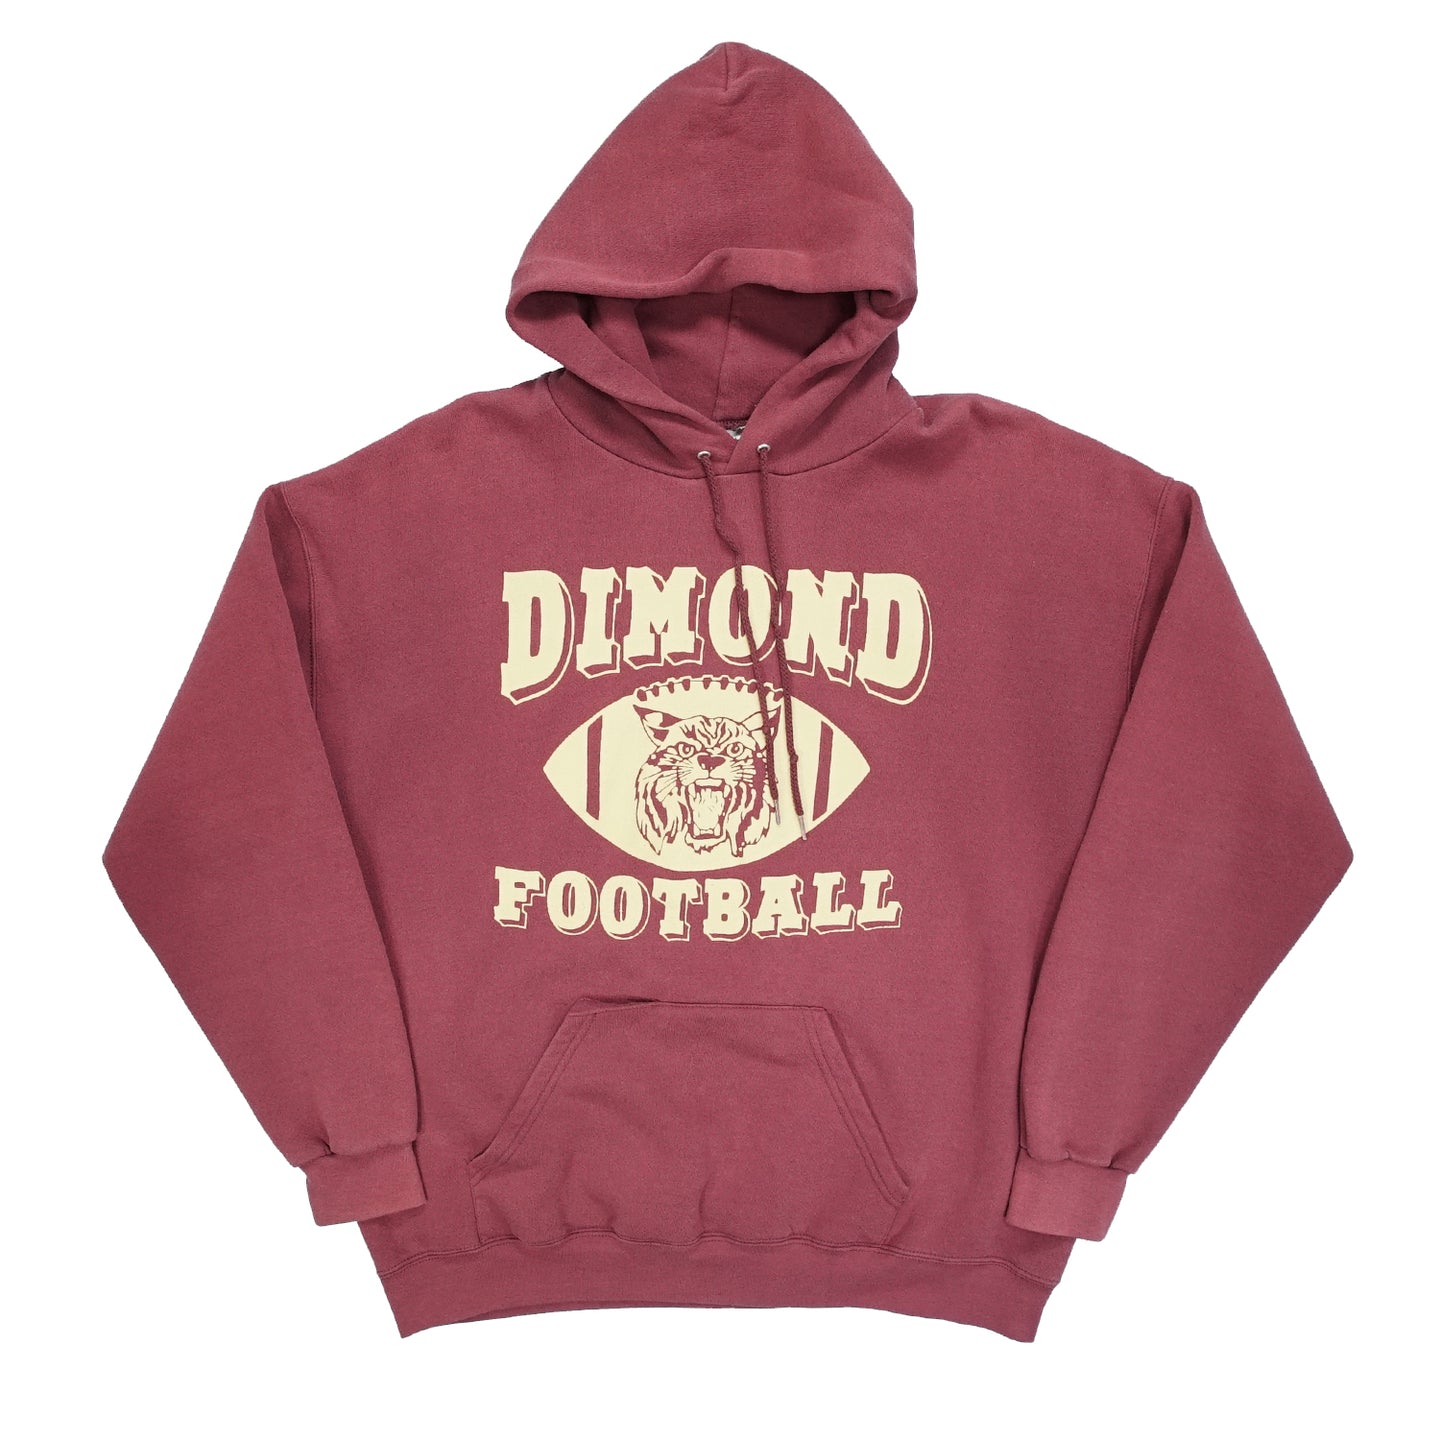 Vintage Dimond Football hoodie XL